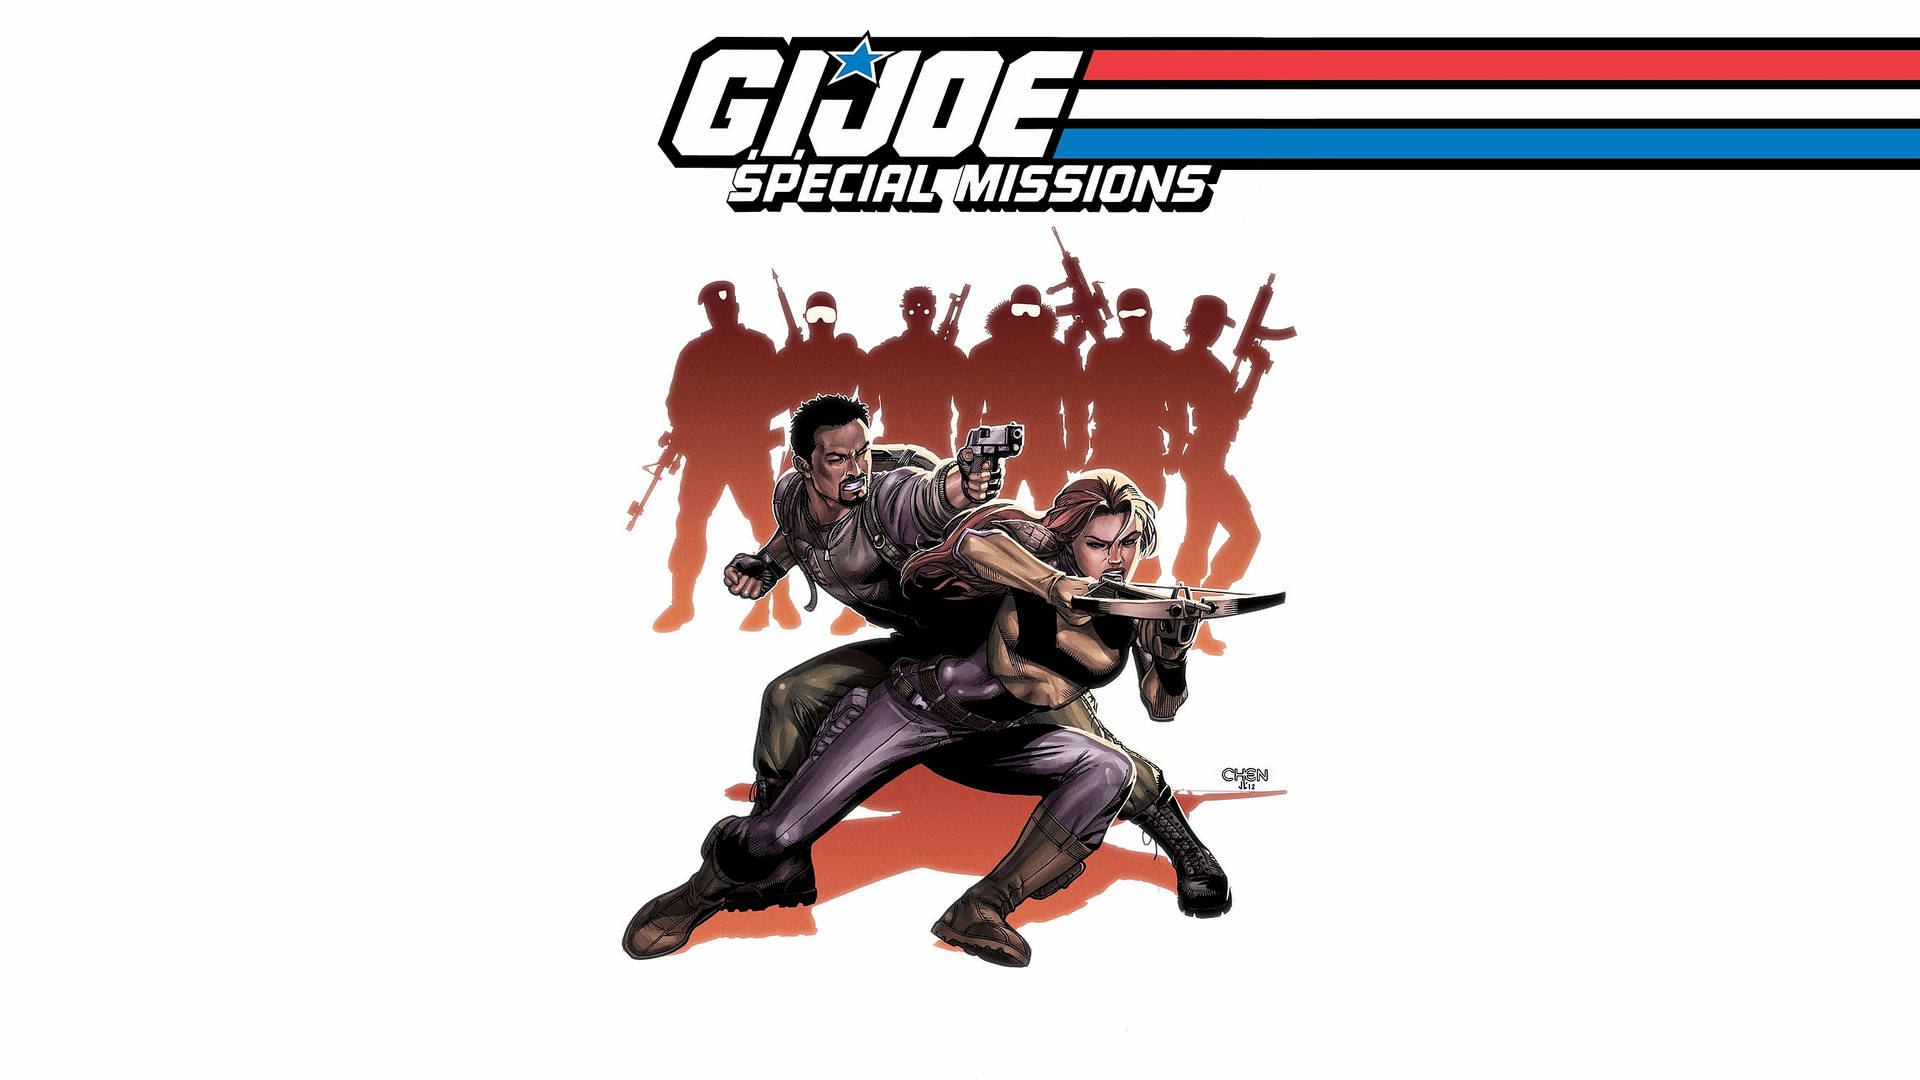 Gi Joe Special Mission Background